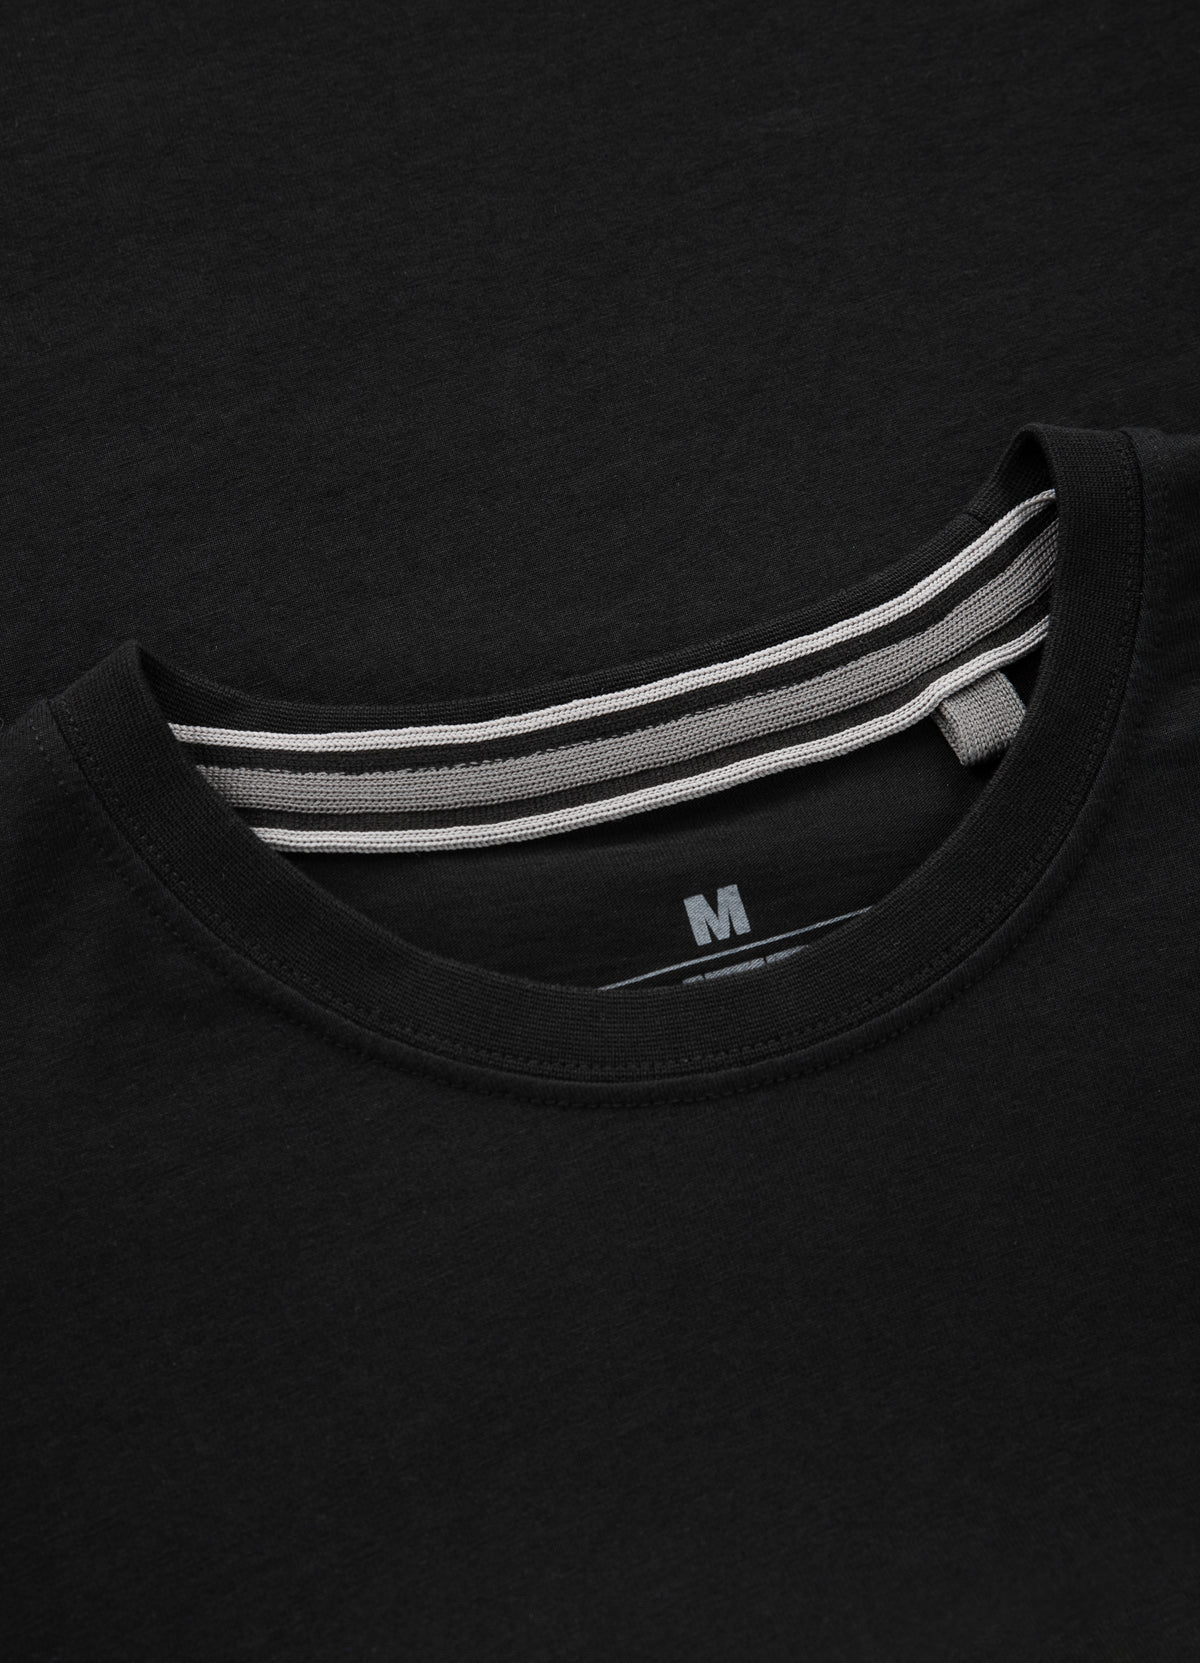 SMALL LOGO 21 Black T-Shirt.